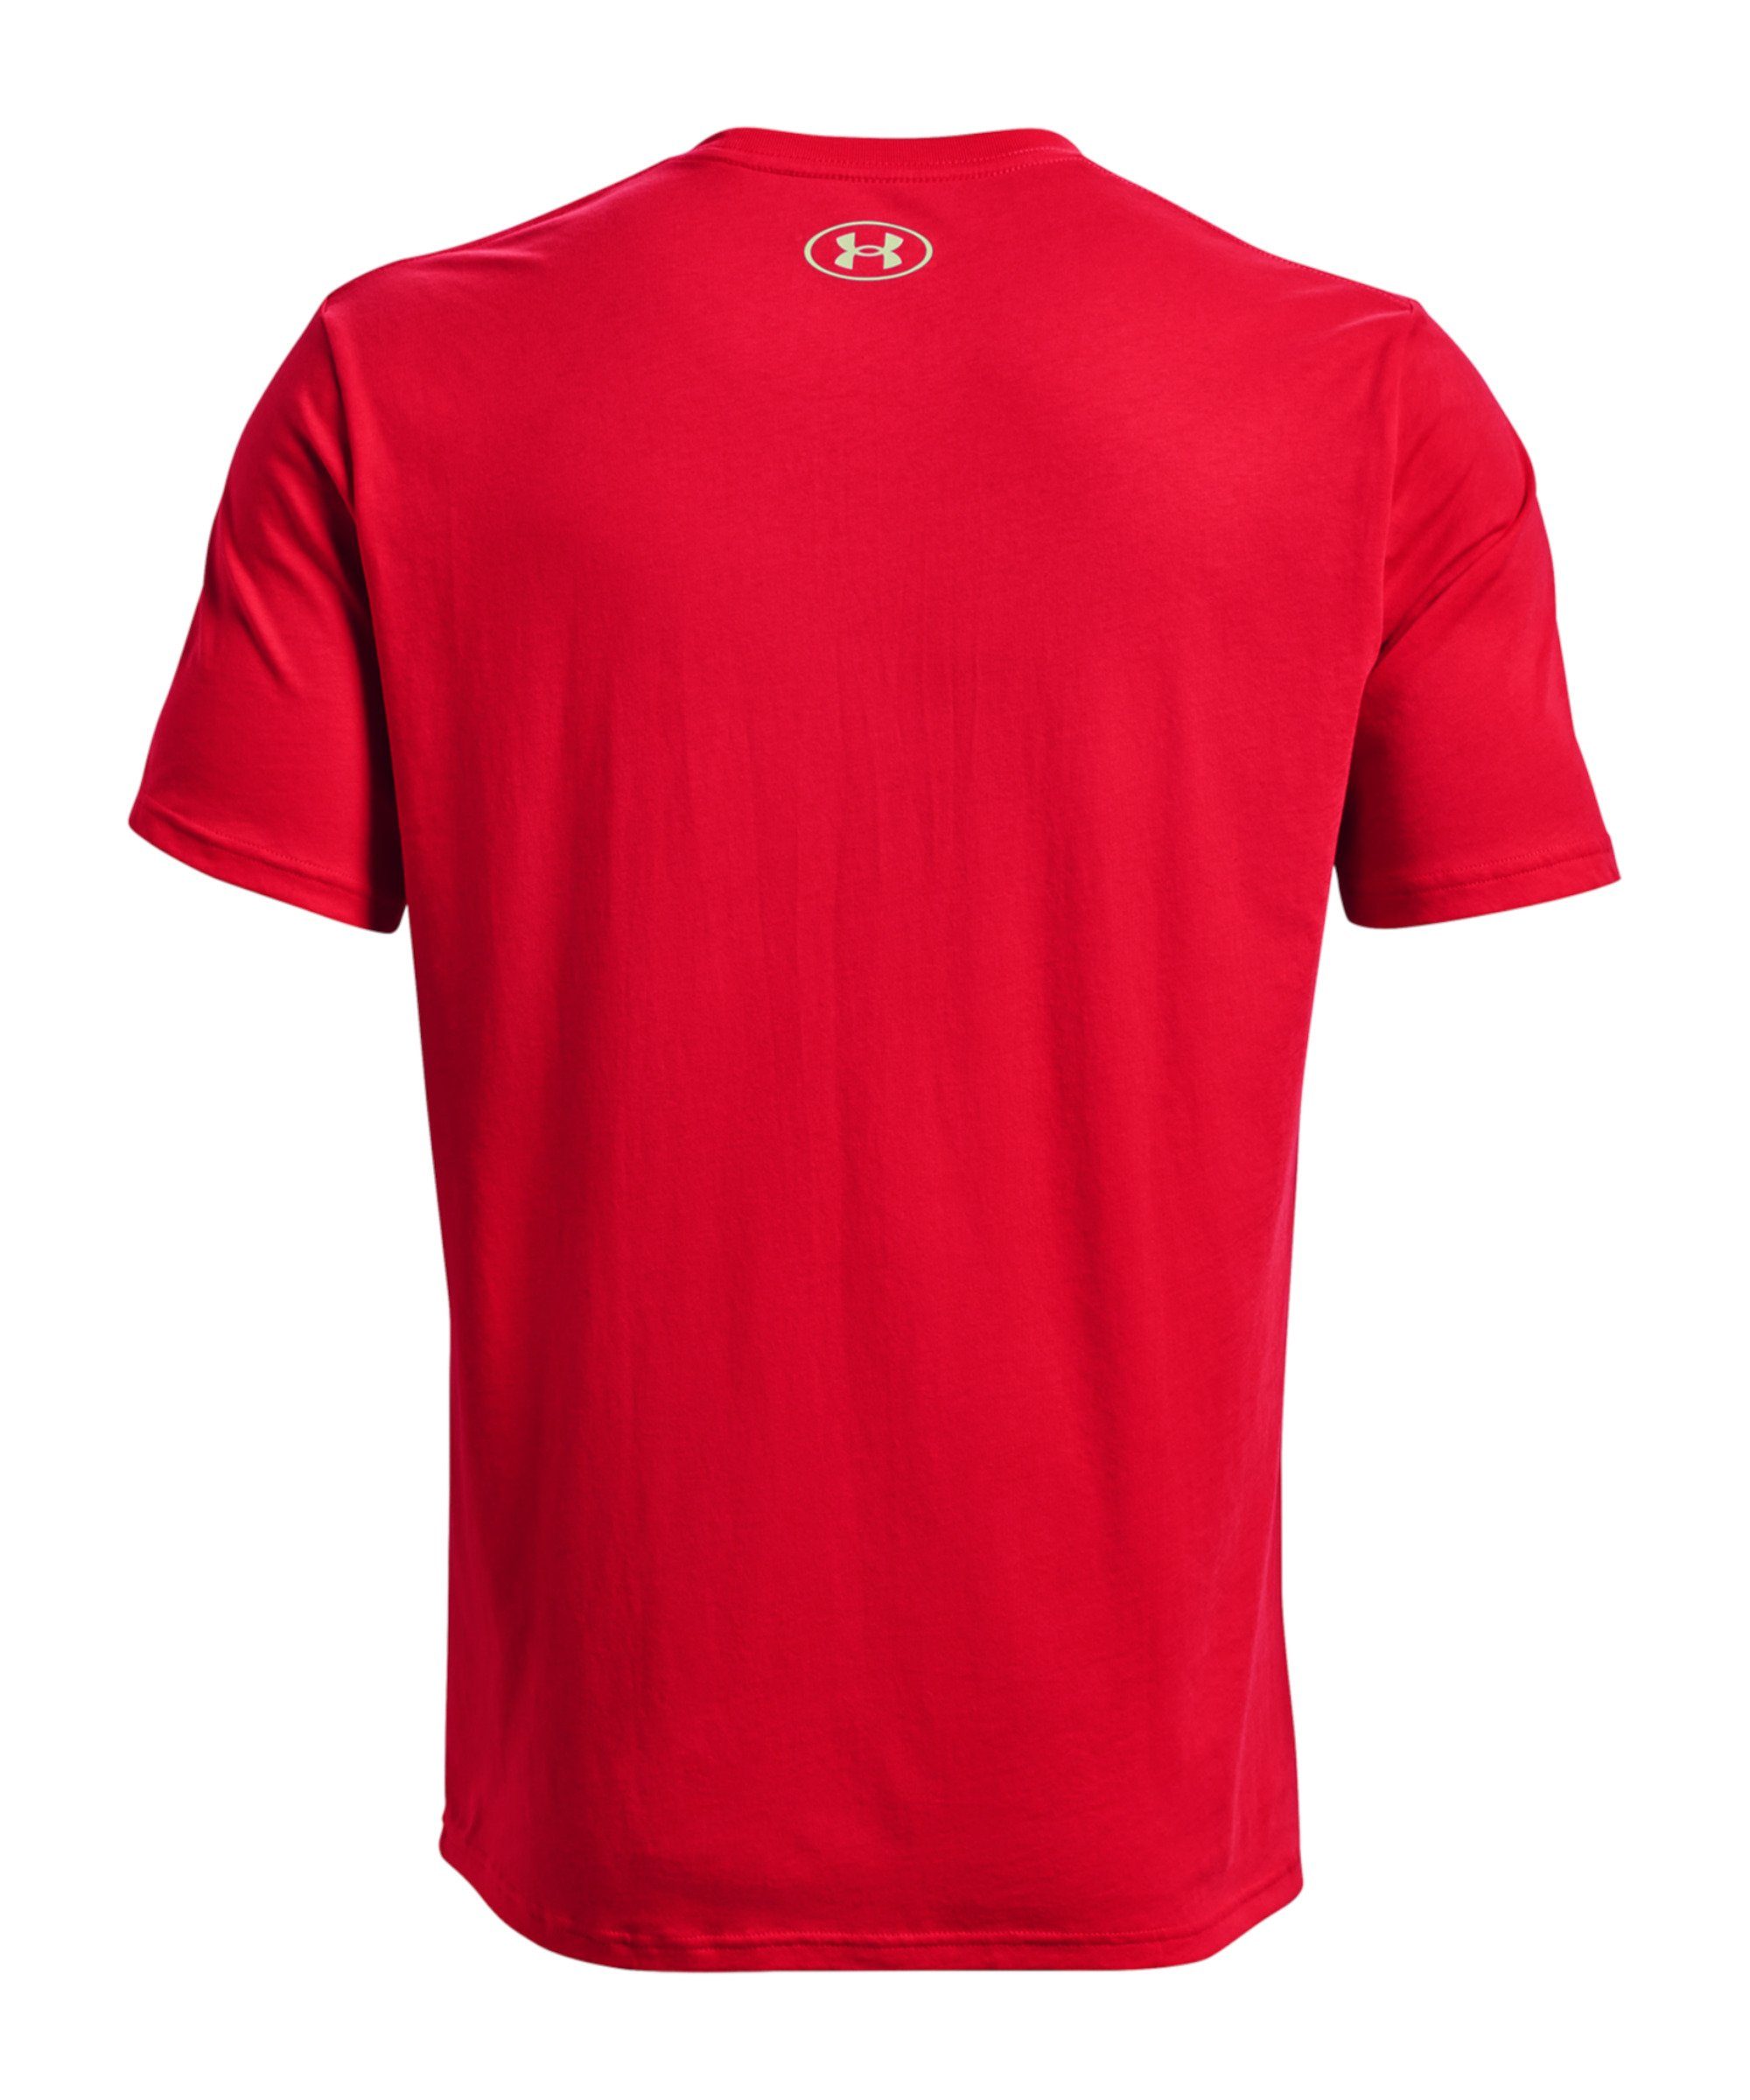 T-Shirt T-Shirt rot Under default Wordmark Armour® Team Issue